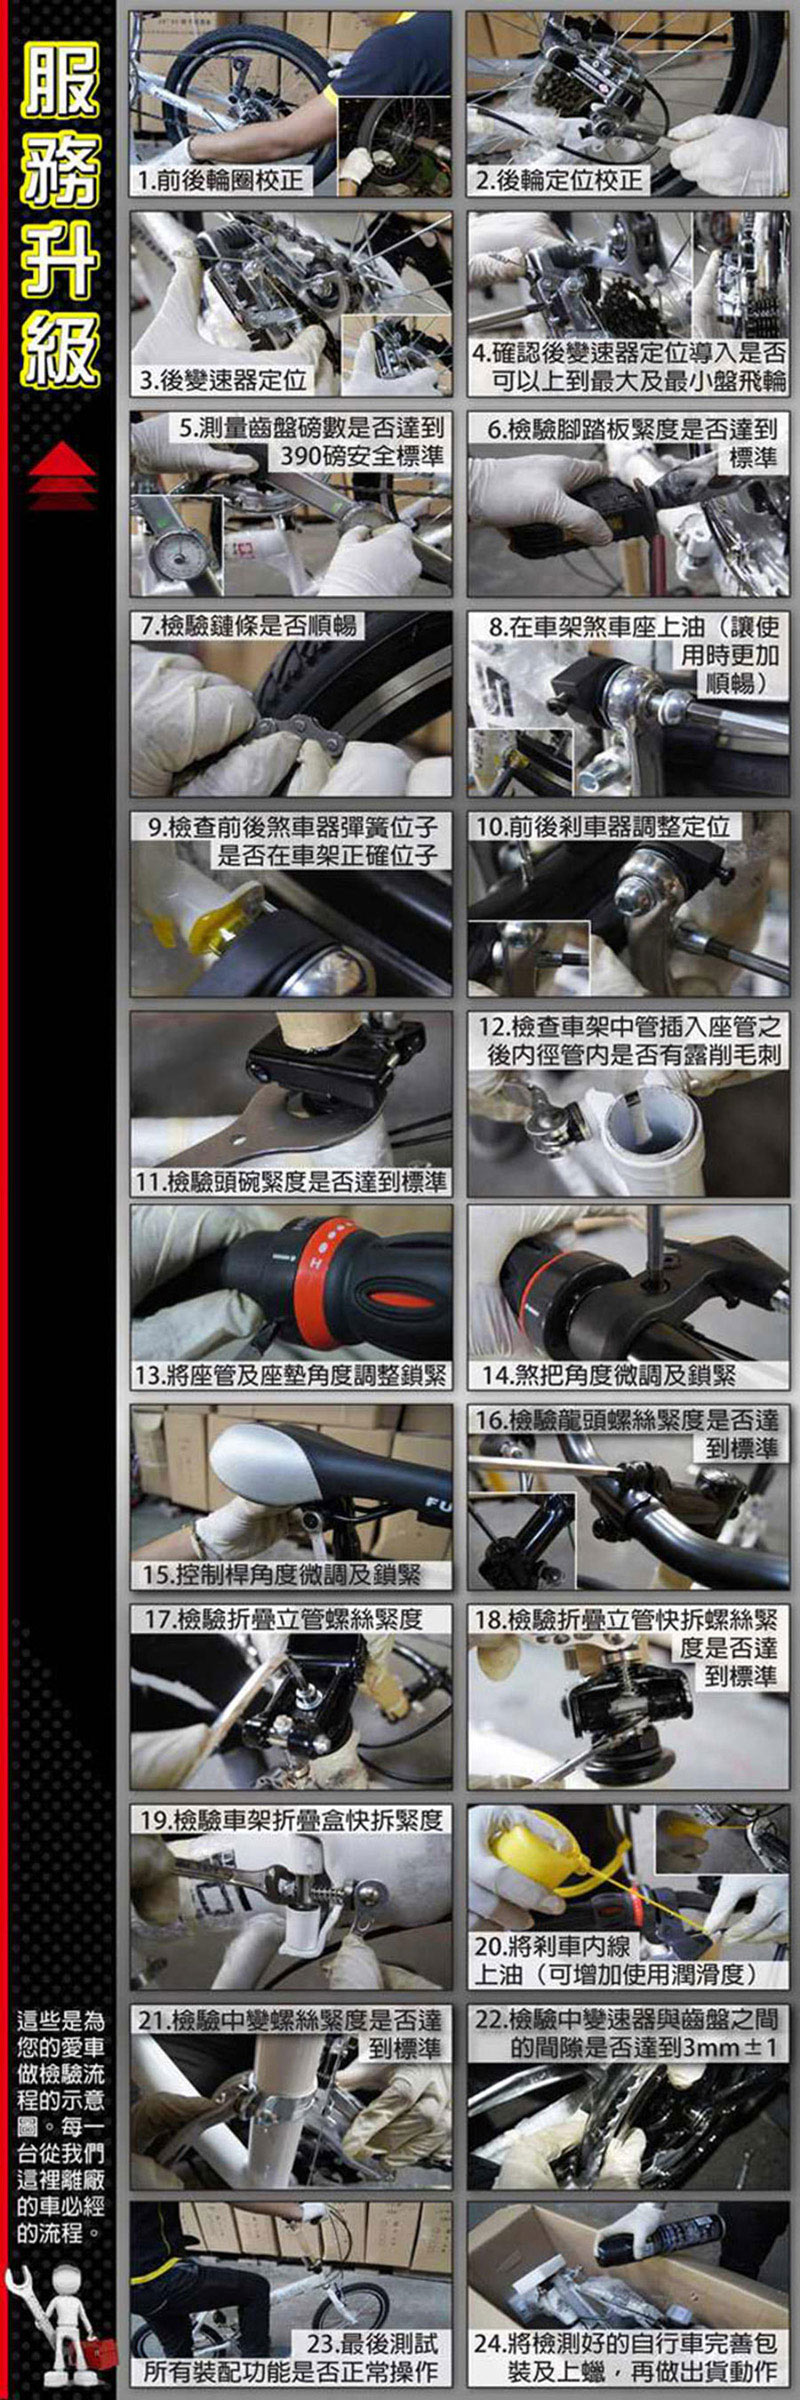 【FUSIN】 26吋高碳鋼V夾搭配無定位21速登山車FM-1/腳踏車/變速車